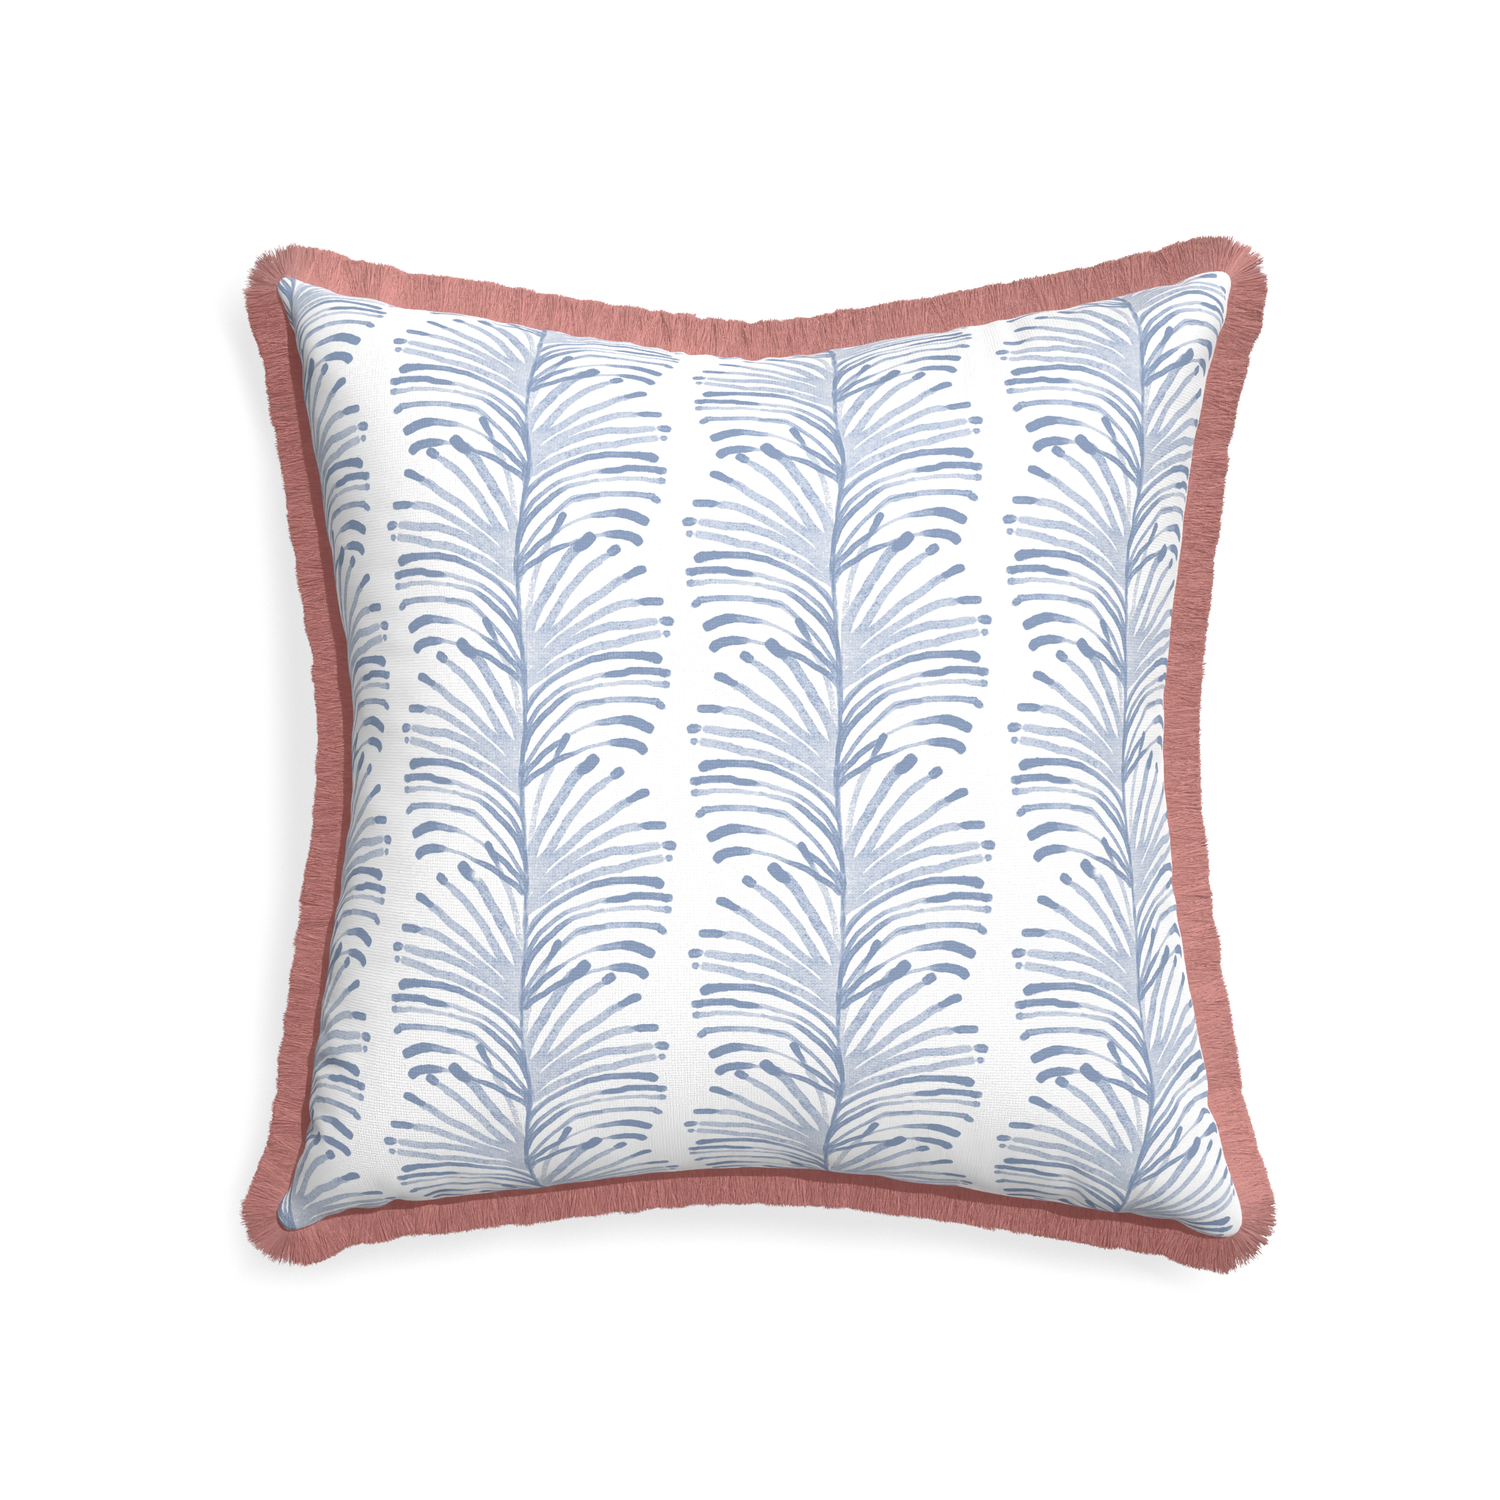 22-square emma sky custom pillow with d fringe on white background